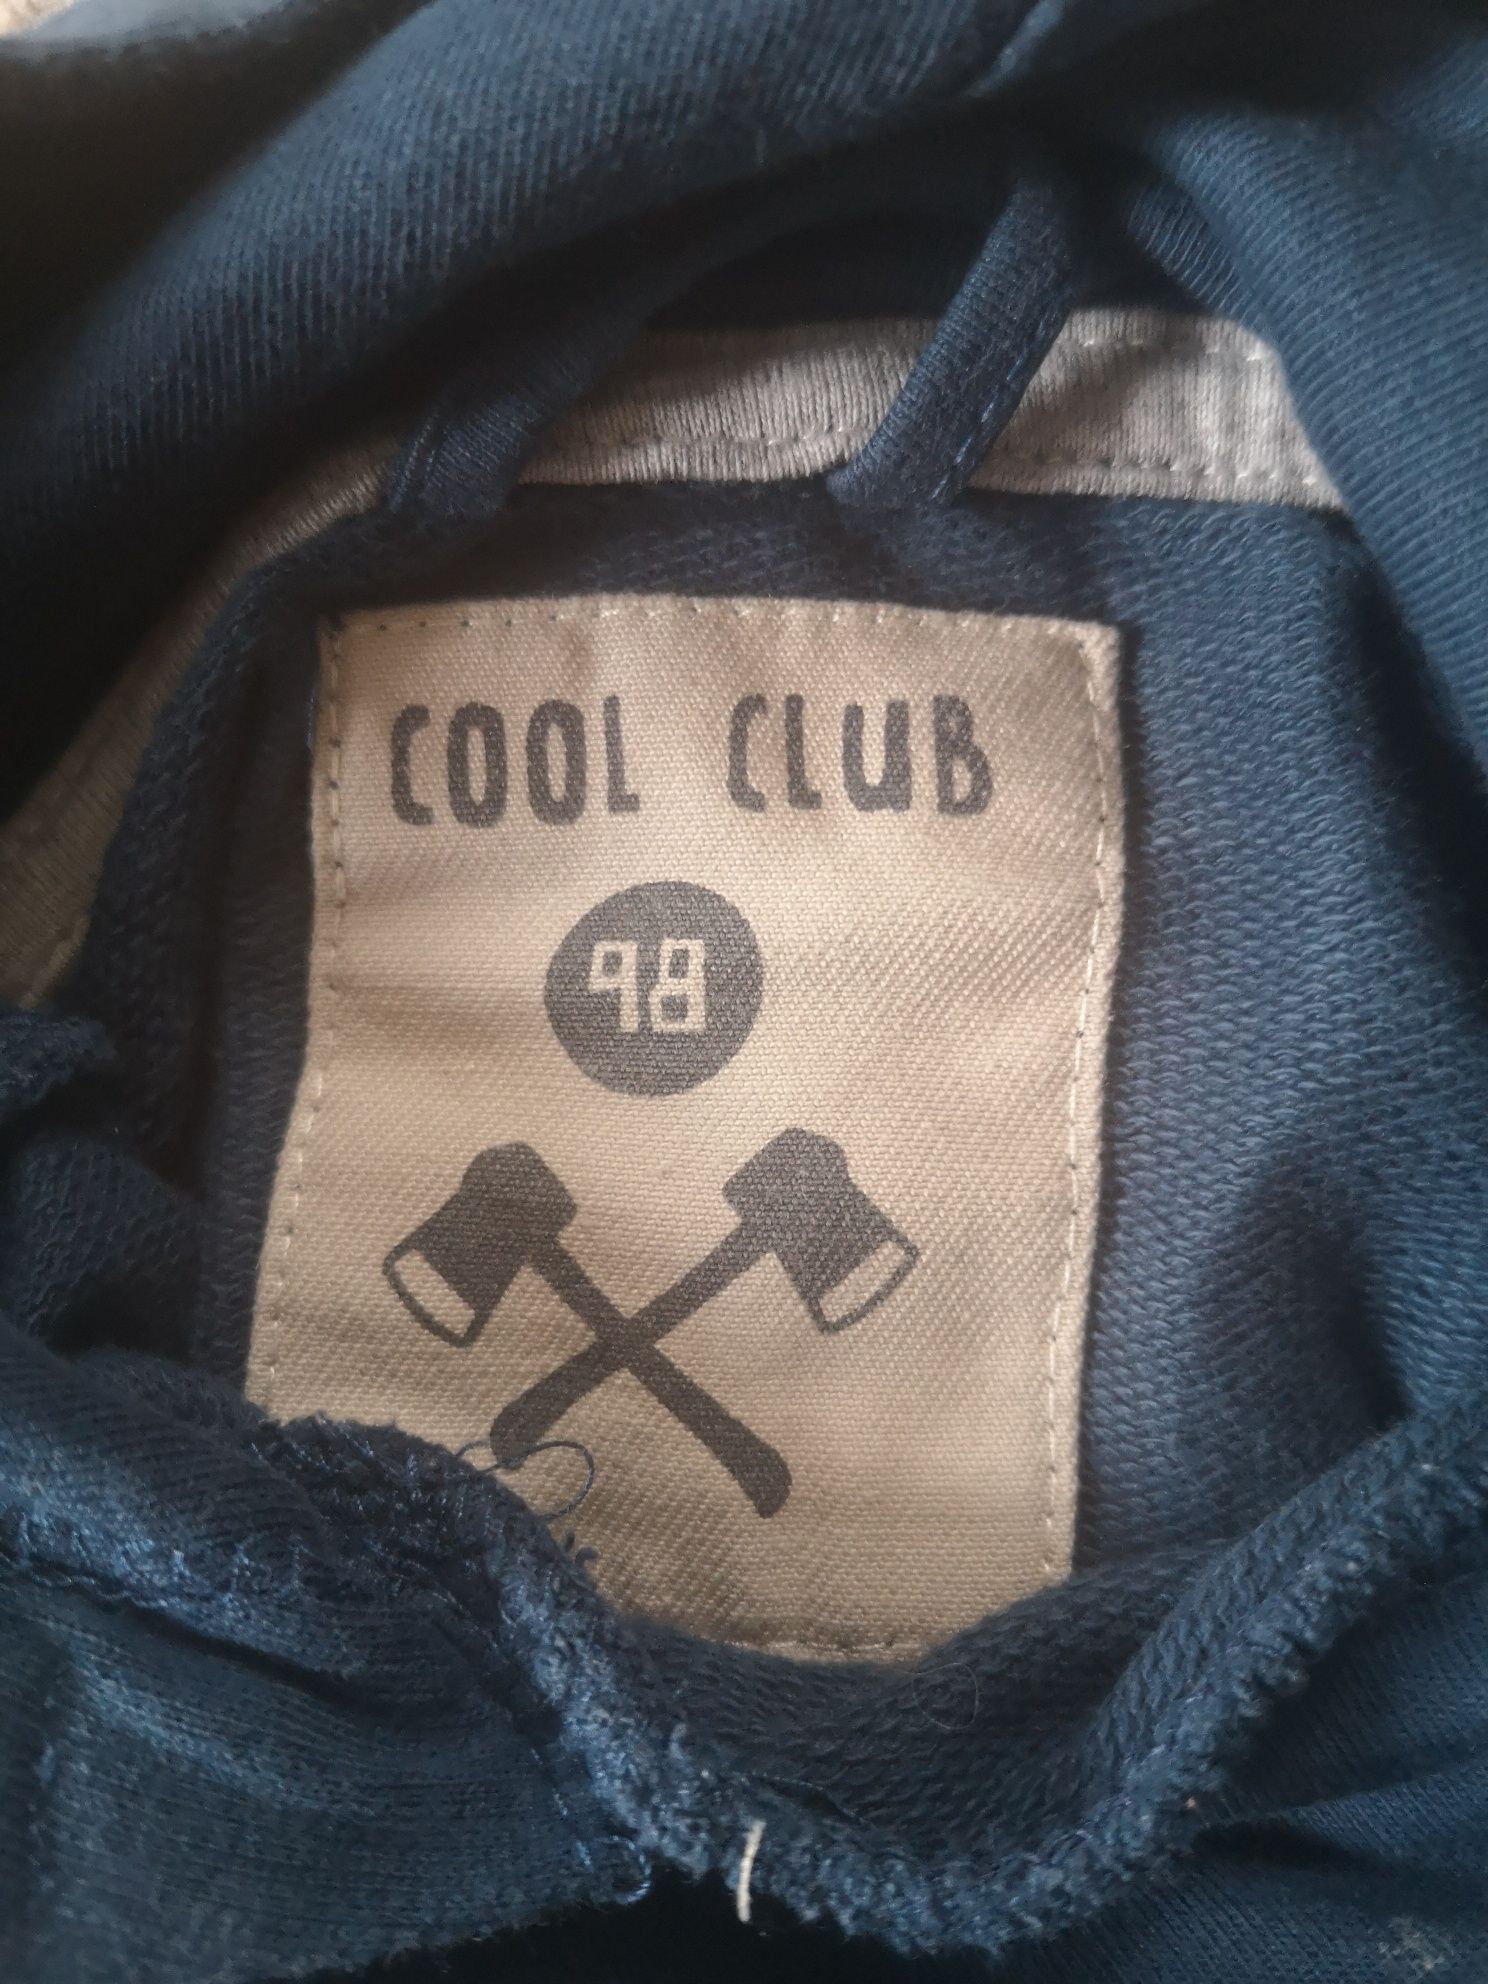 Bluza cool club 98